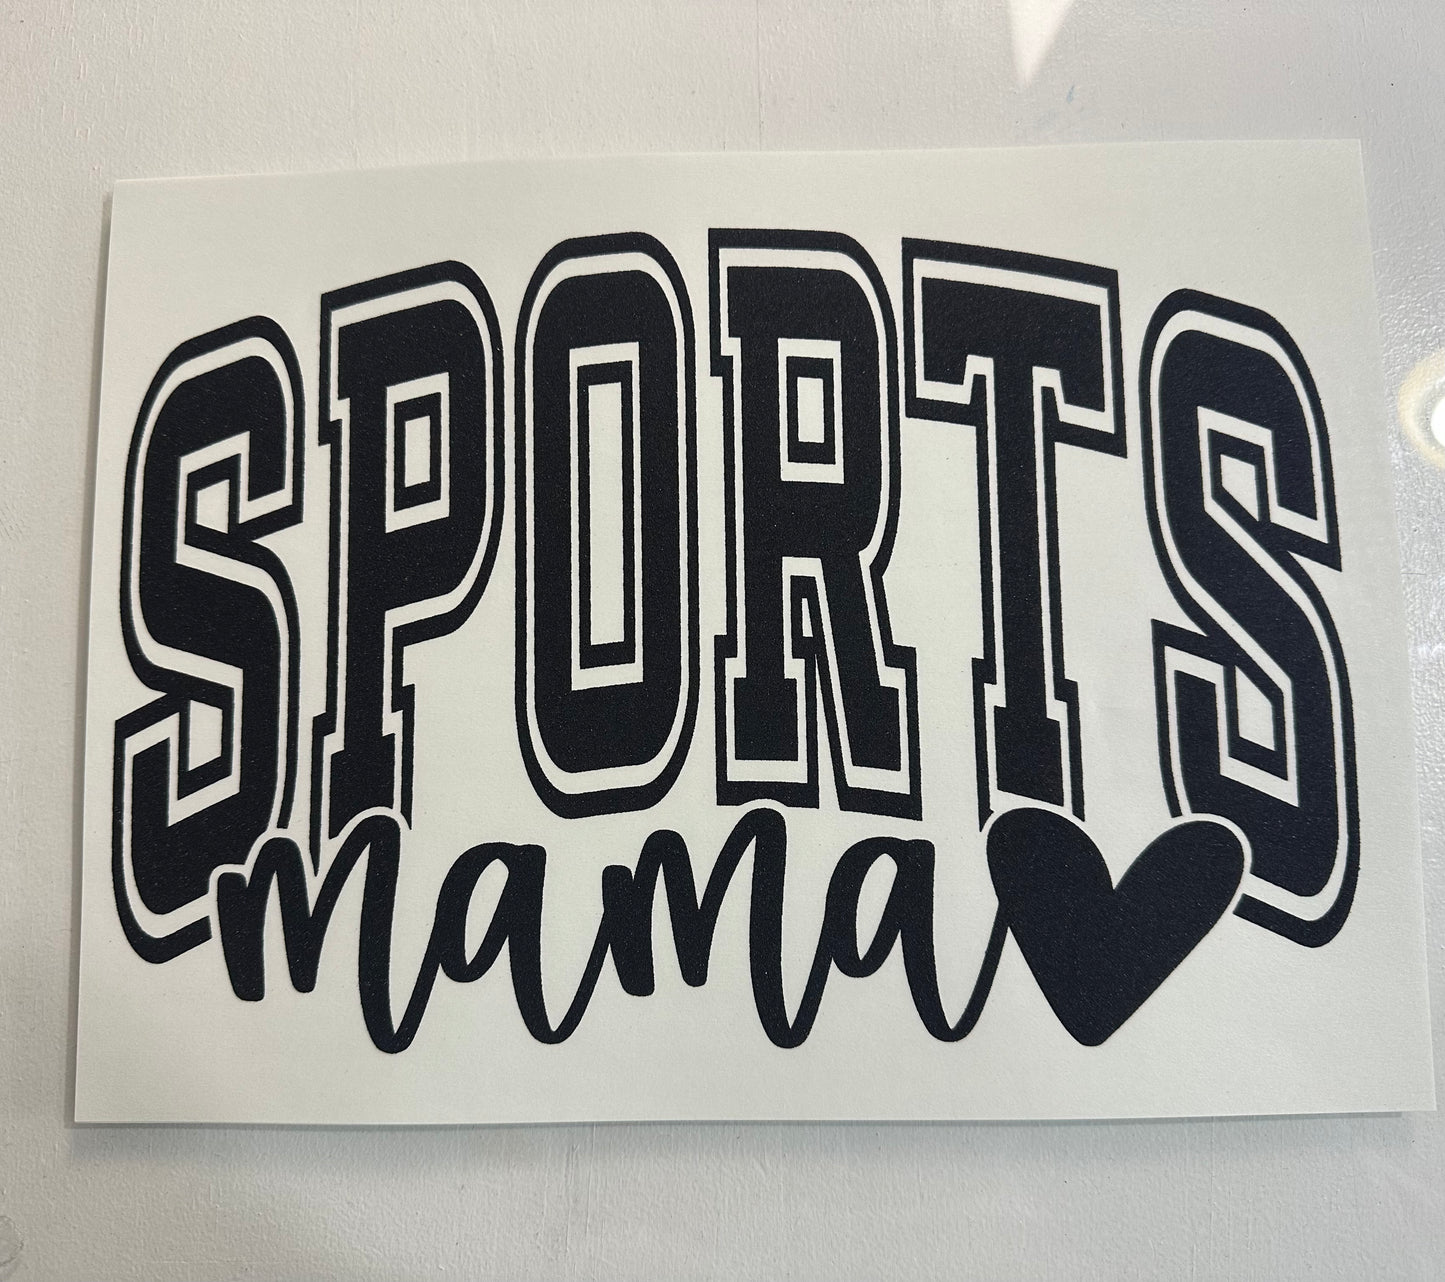 Sports Mama Black